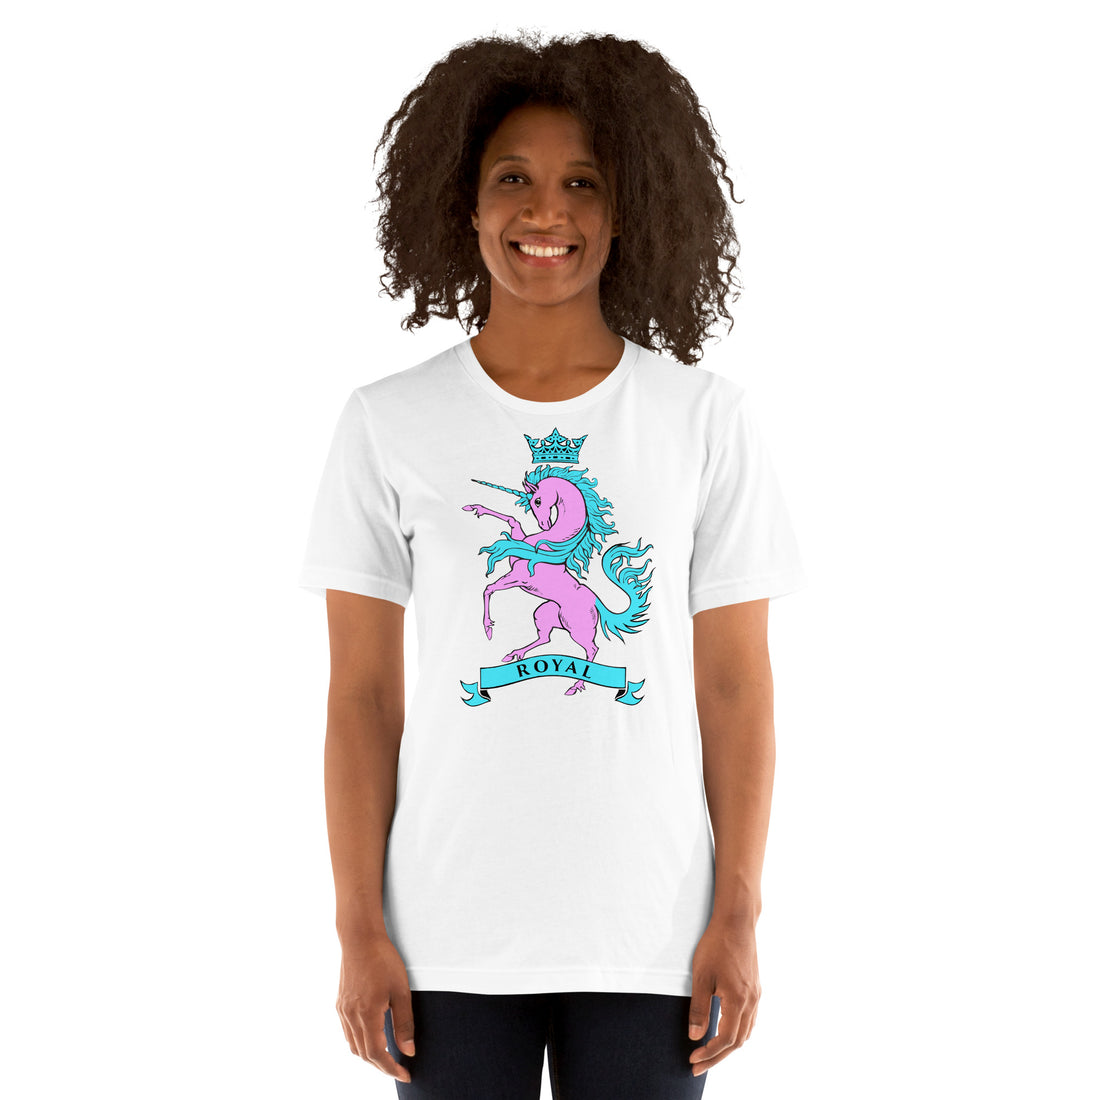 Royal - Unicorn T-Shirt -  affirmation, support, motivational message T-Shirt soft 100% cotton